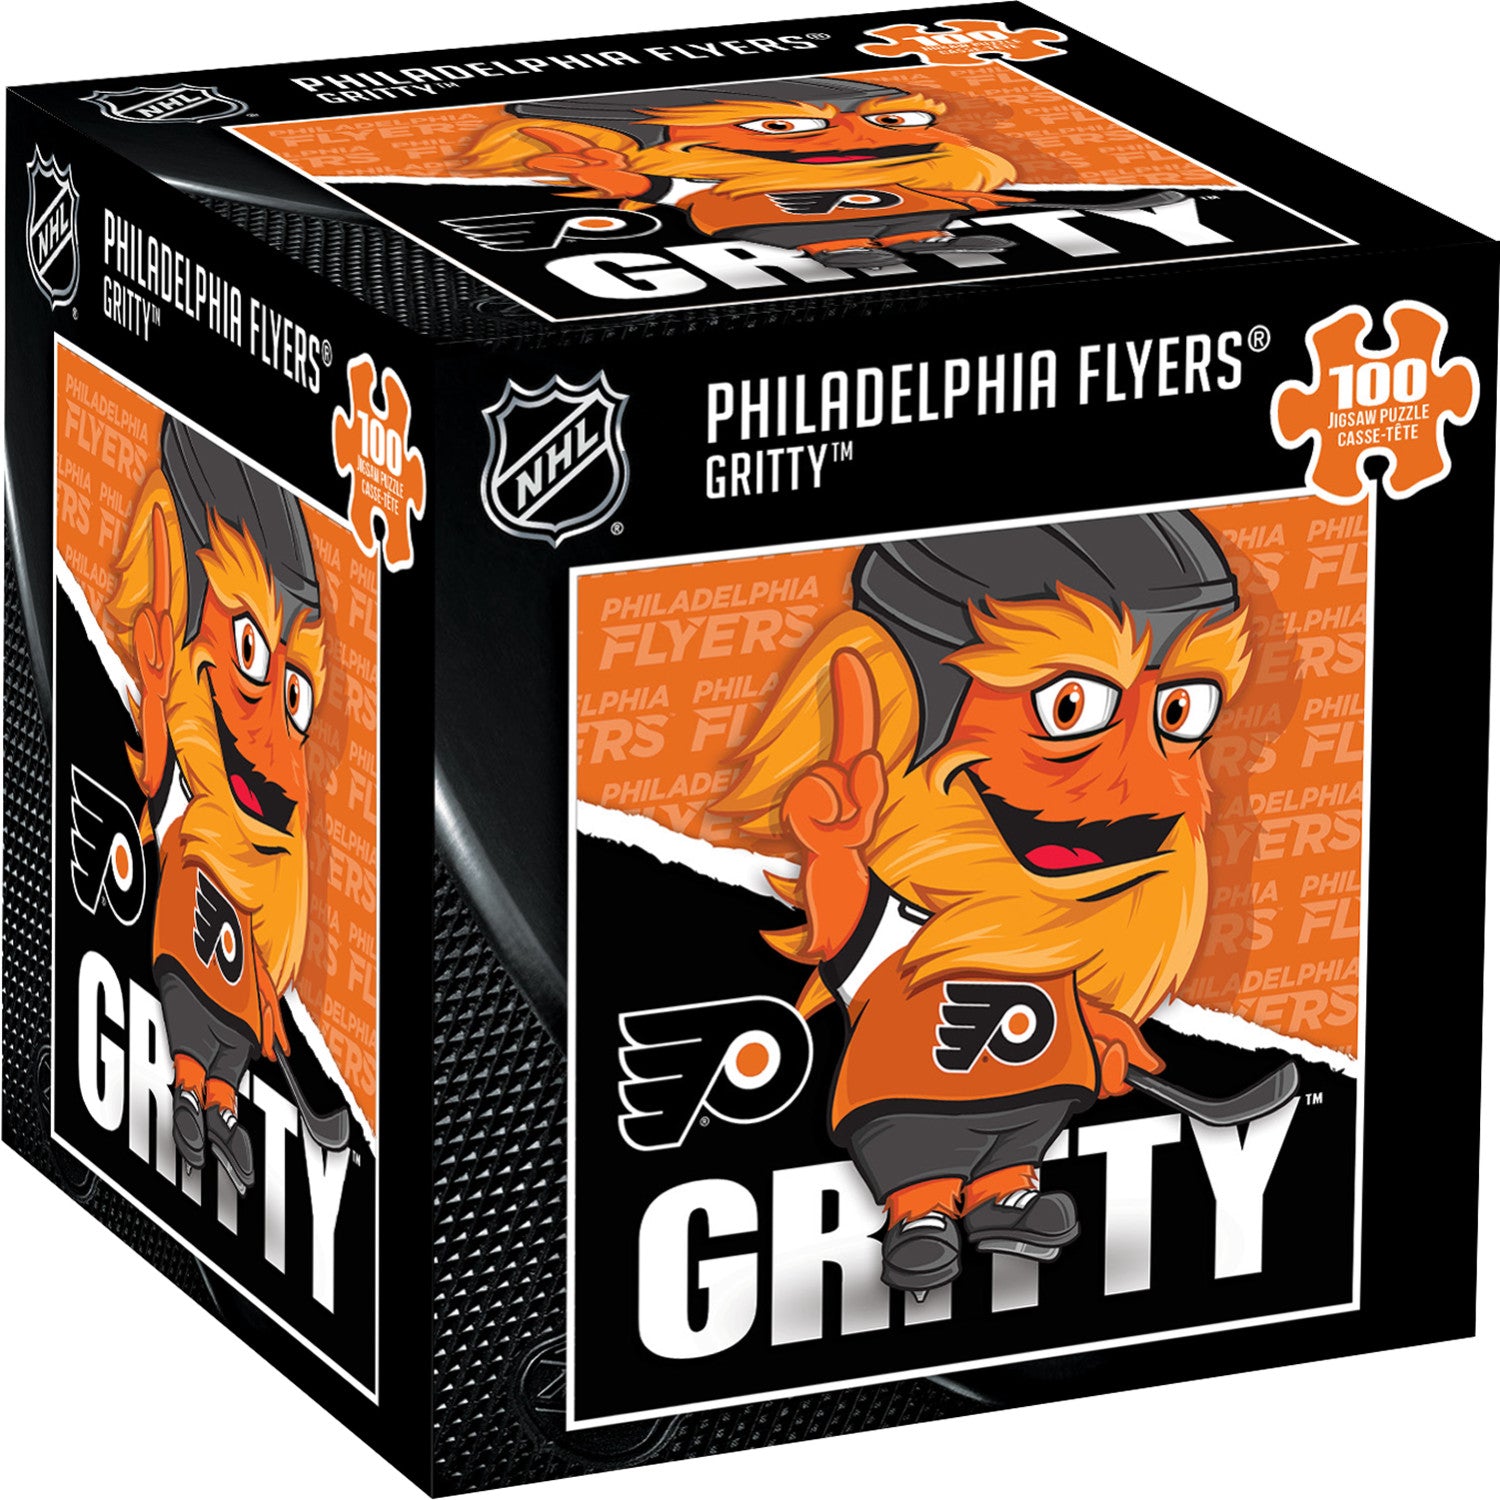 Gritty - Philadelphia Flyers Mascot 100 Piece Jigsaw Puzzle